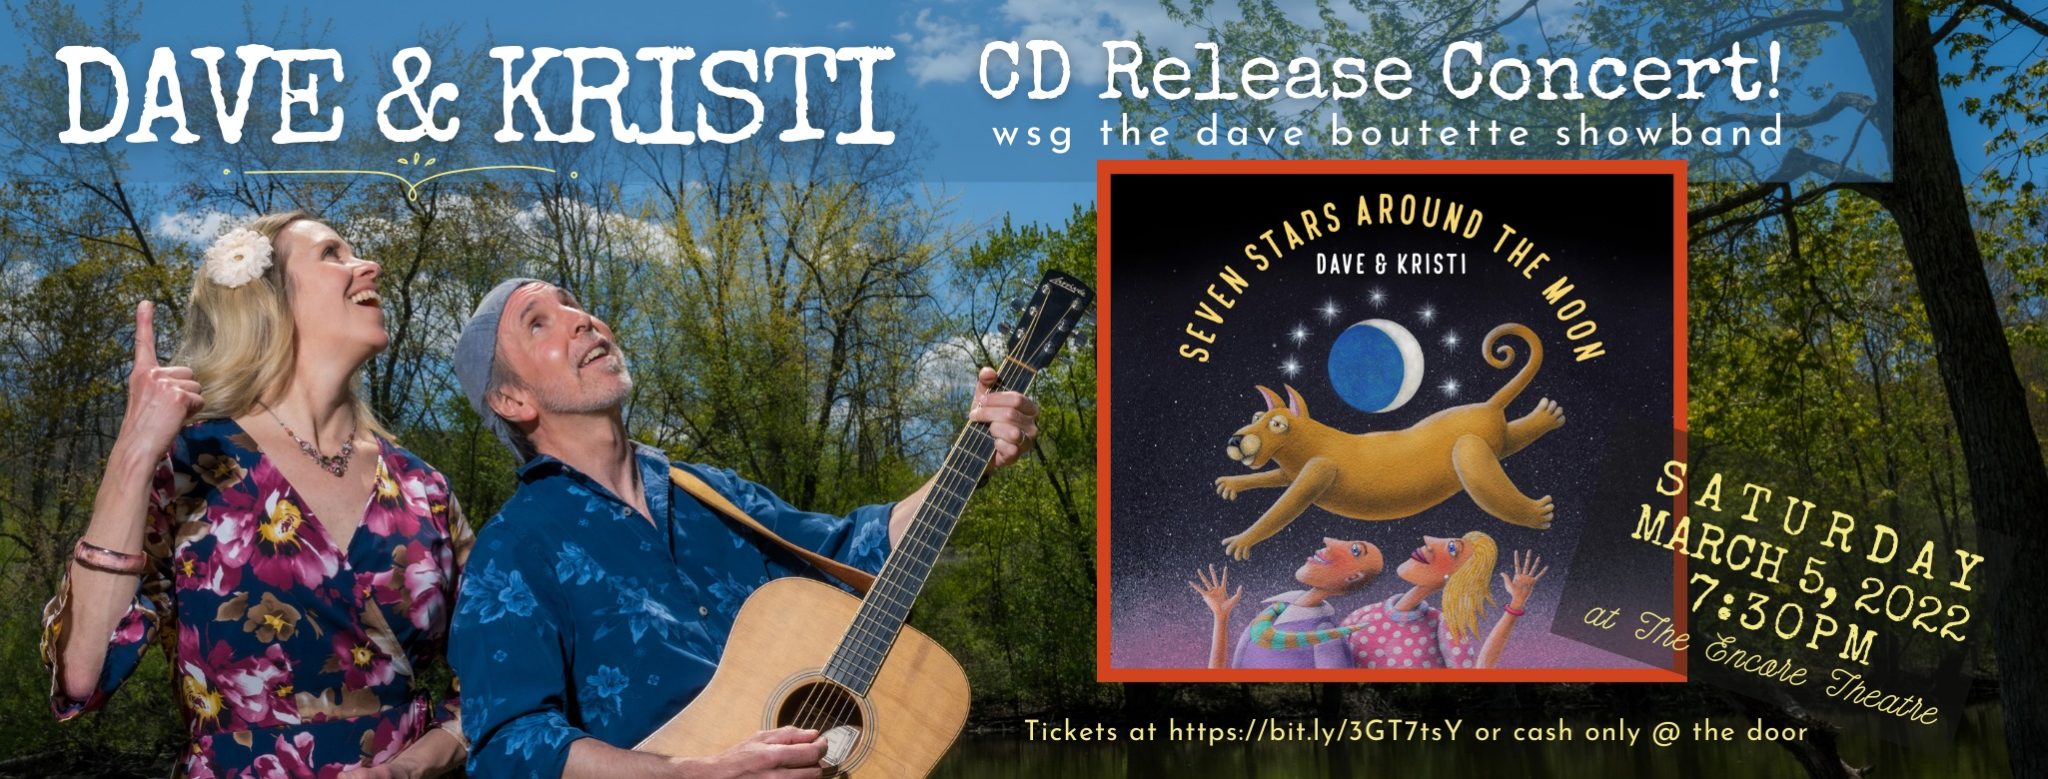 Dave & Kristi - CD Release Concert Saturday March 5, 2022 7:30 pm at The Encore Musical Theatre, Dexter, Michigan